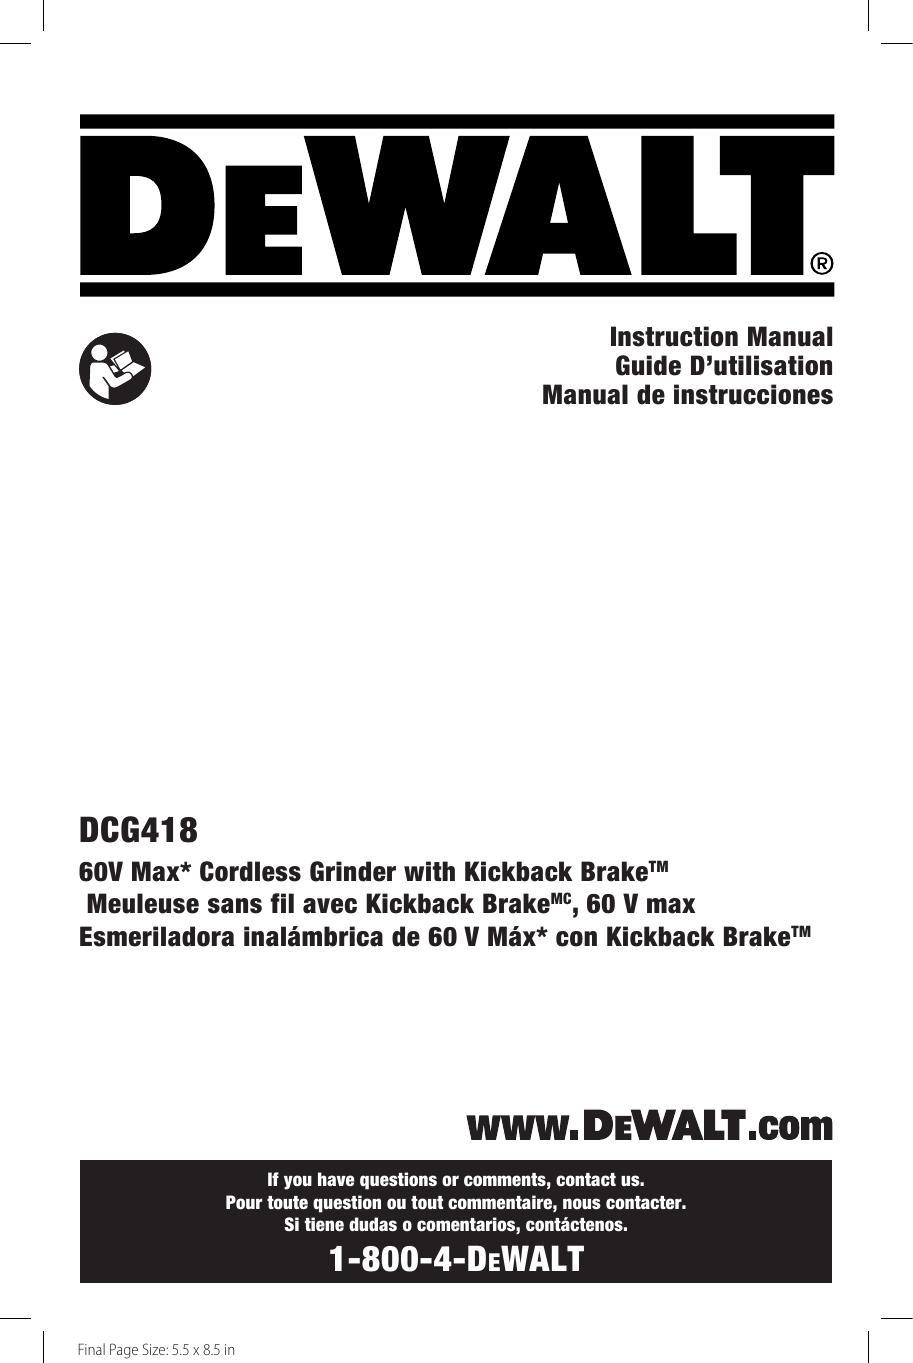 dcg418-6ov-max-cordless-grinder-with-kickback-brake-instruction-manual.pdf